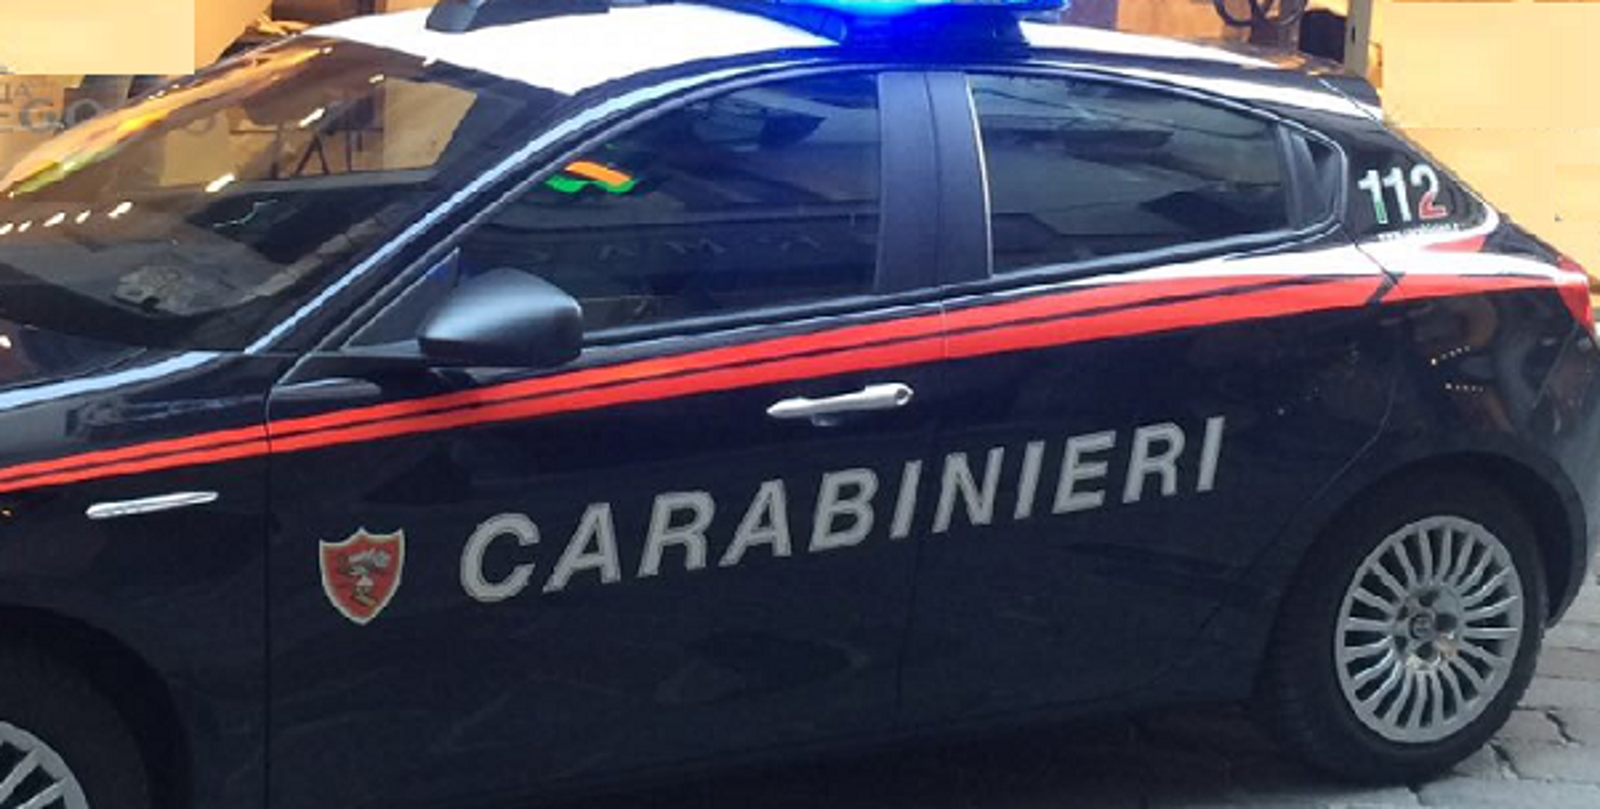 Auto carabinieri-1600x2077